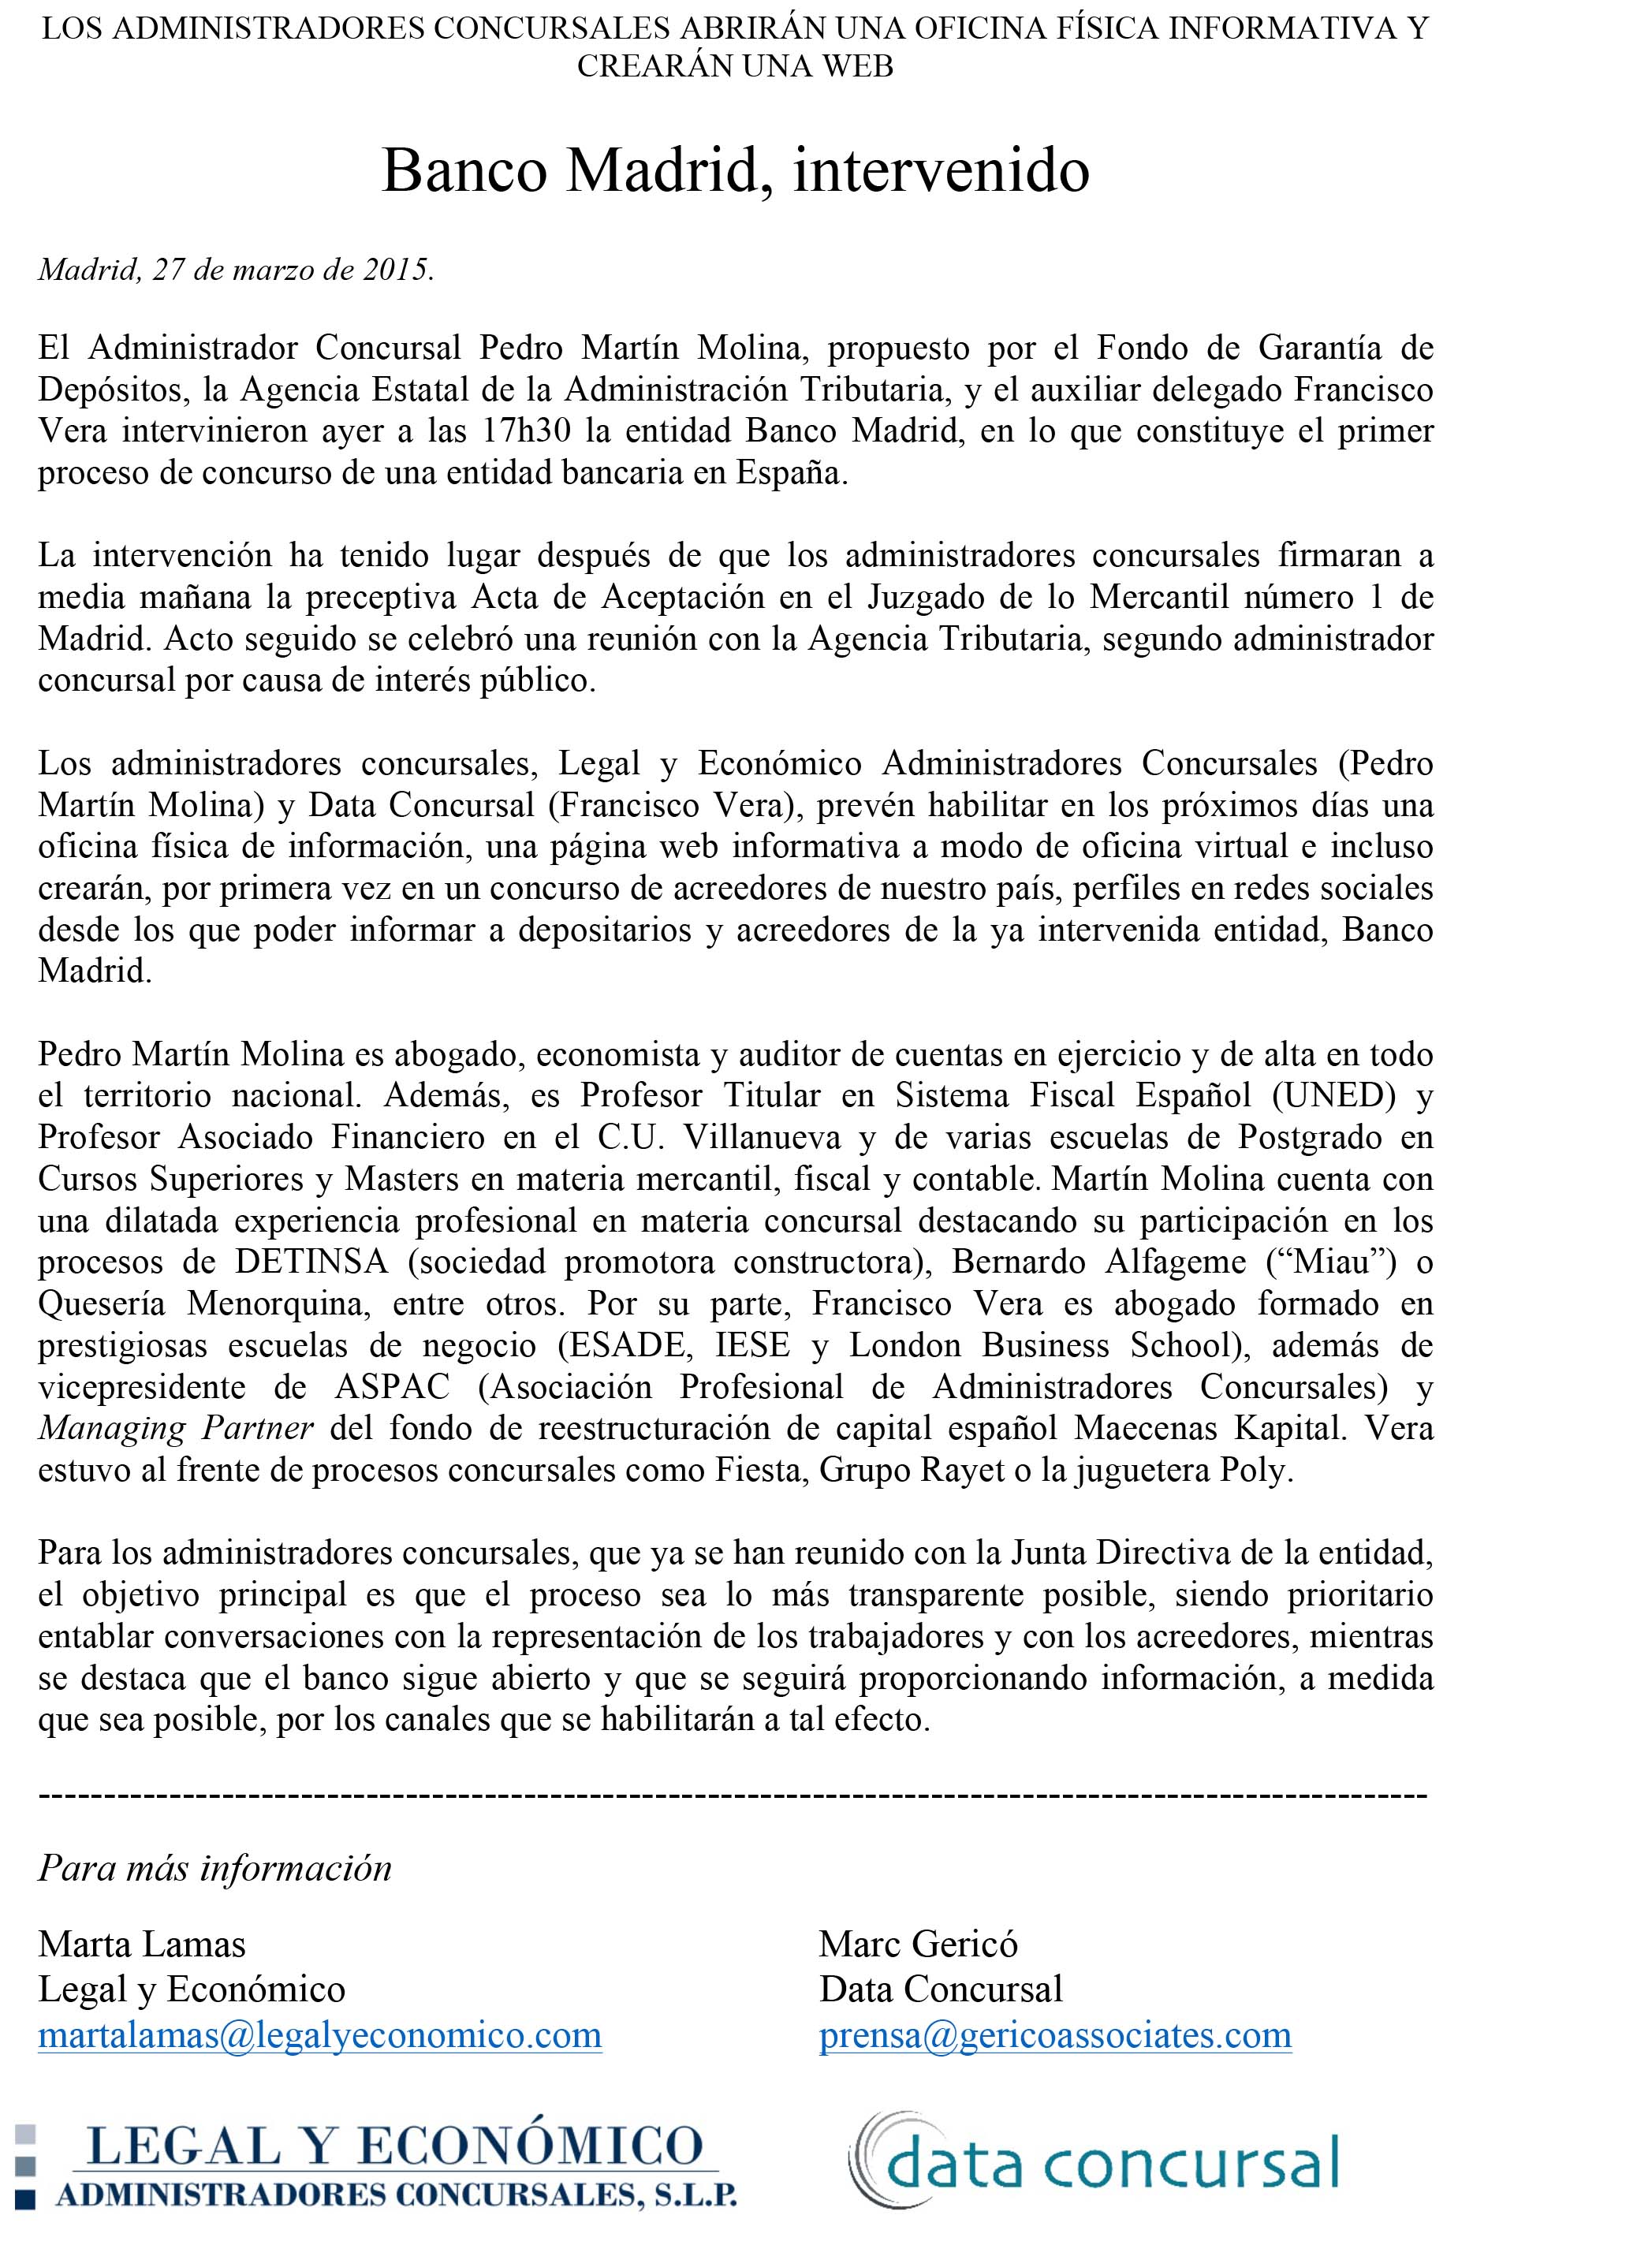 Microsoft Word - Banco Madrid, intervenido.docx